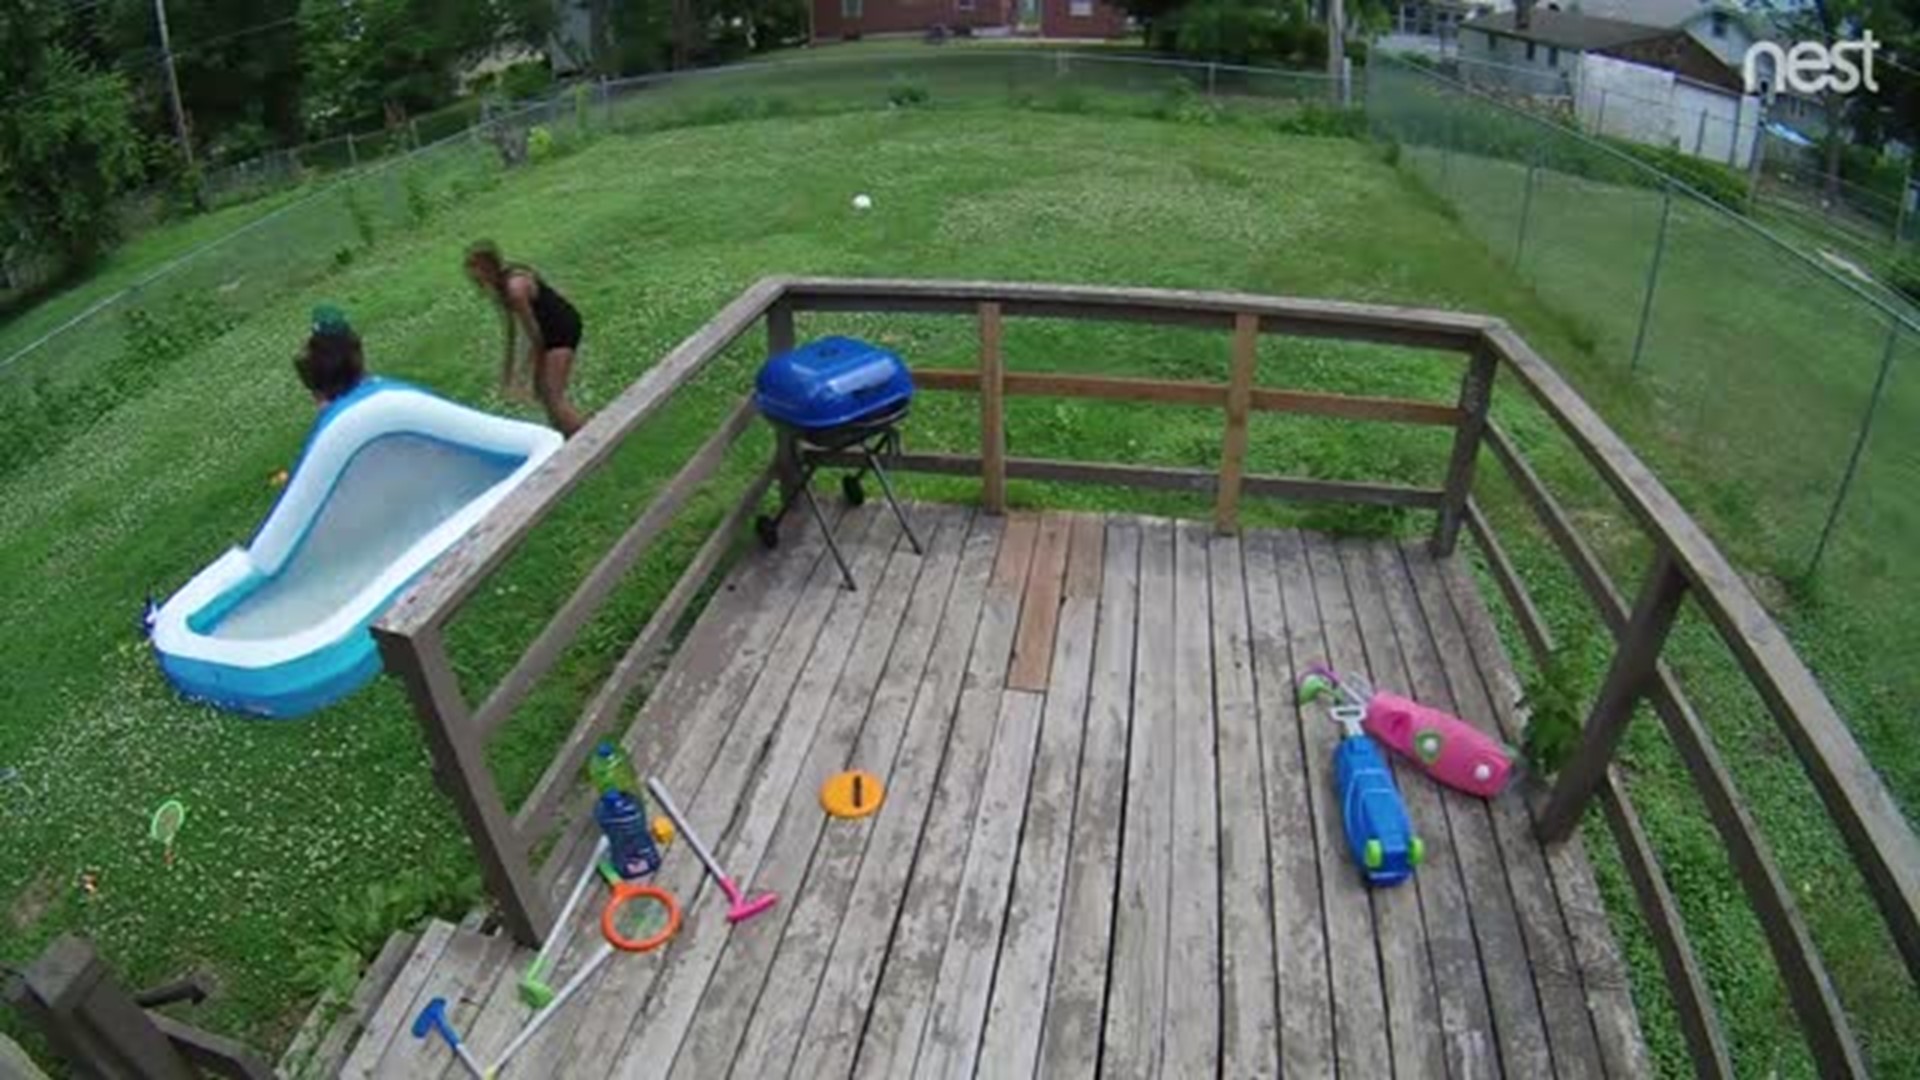 Thieves Swipe Kids Pool From Backyard in Broad Daylight